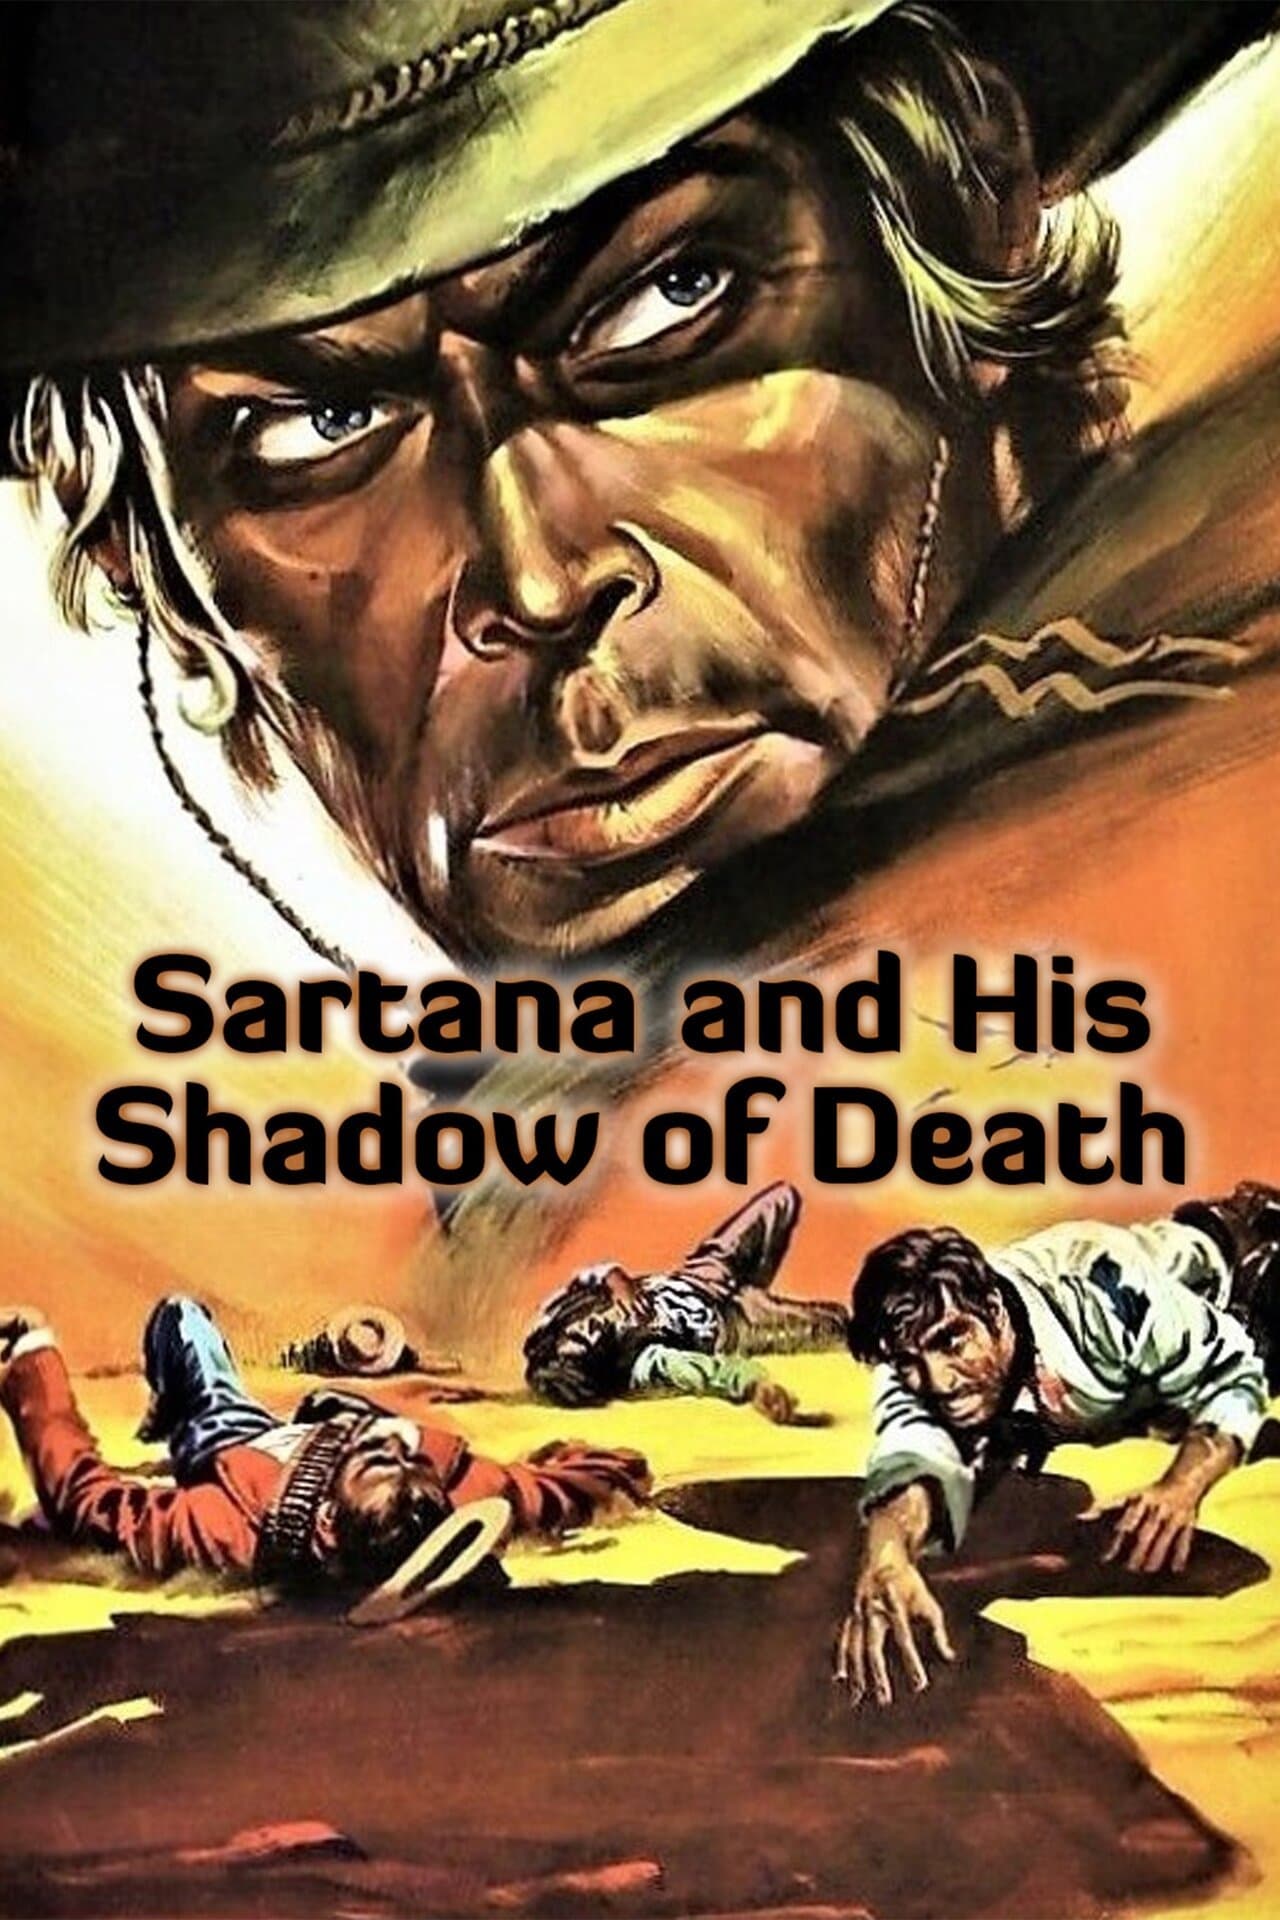 Sartana and His Shadow of Death